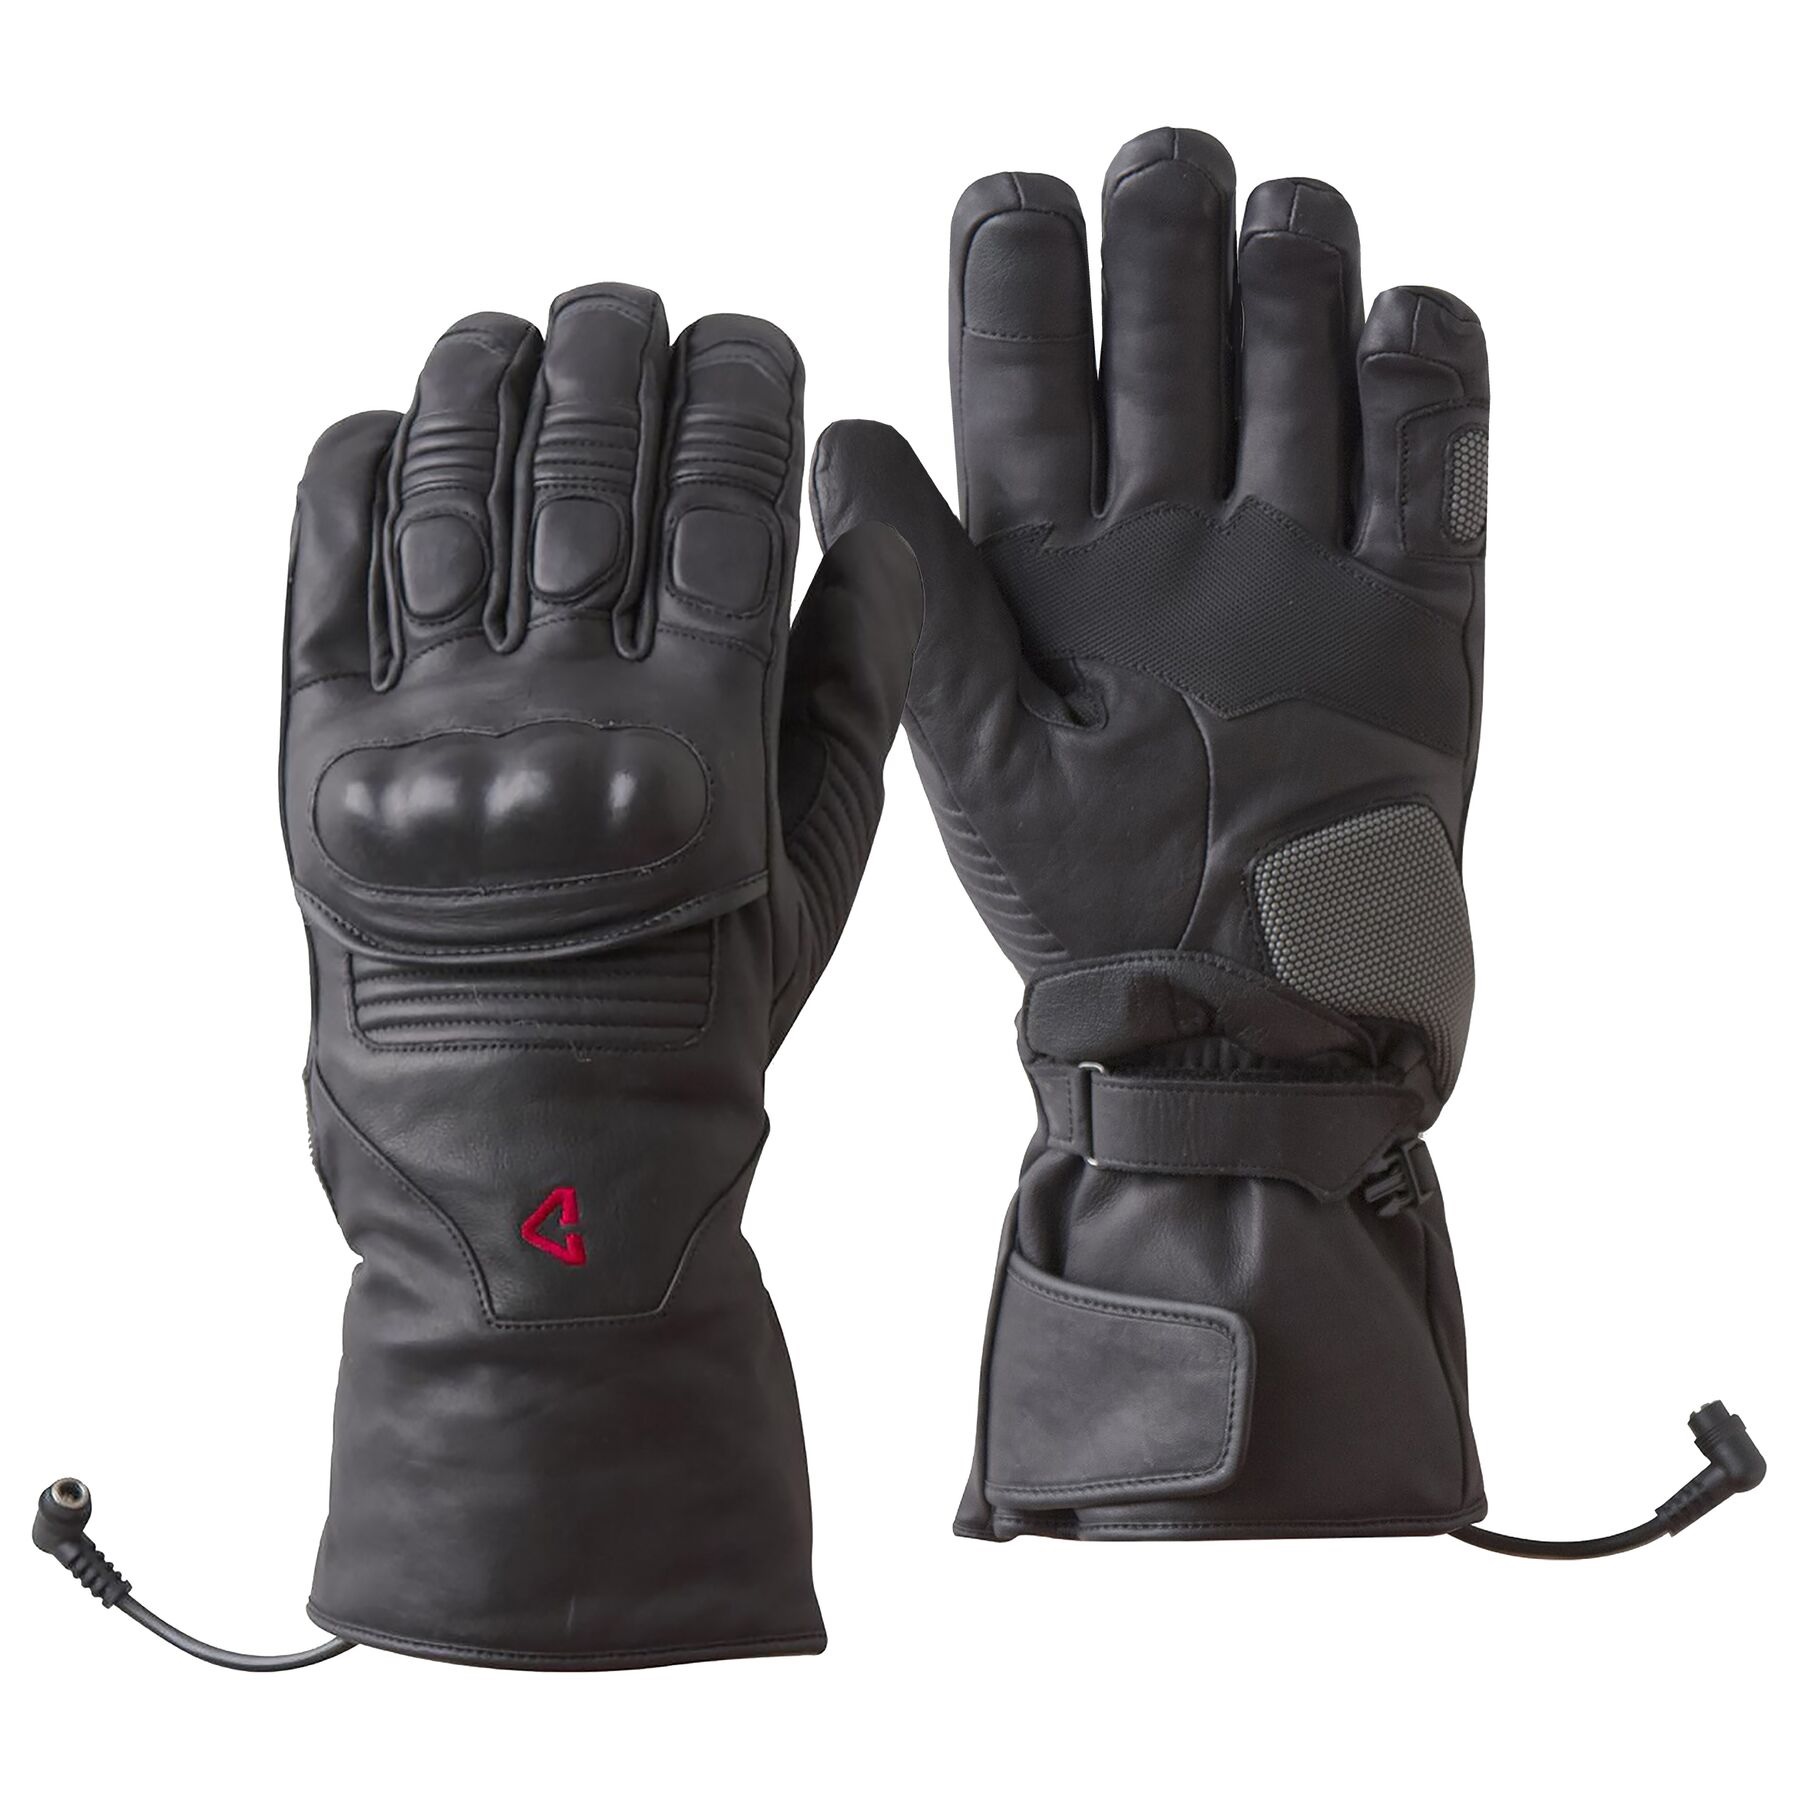 Gebring Vanguard Heated Gloves